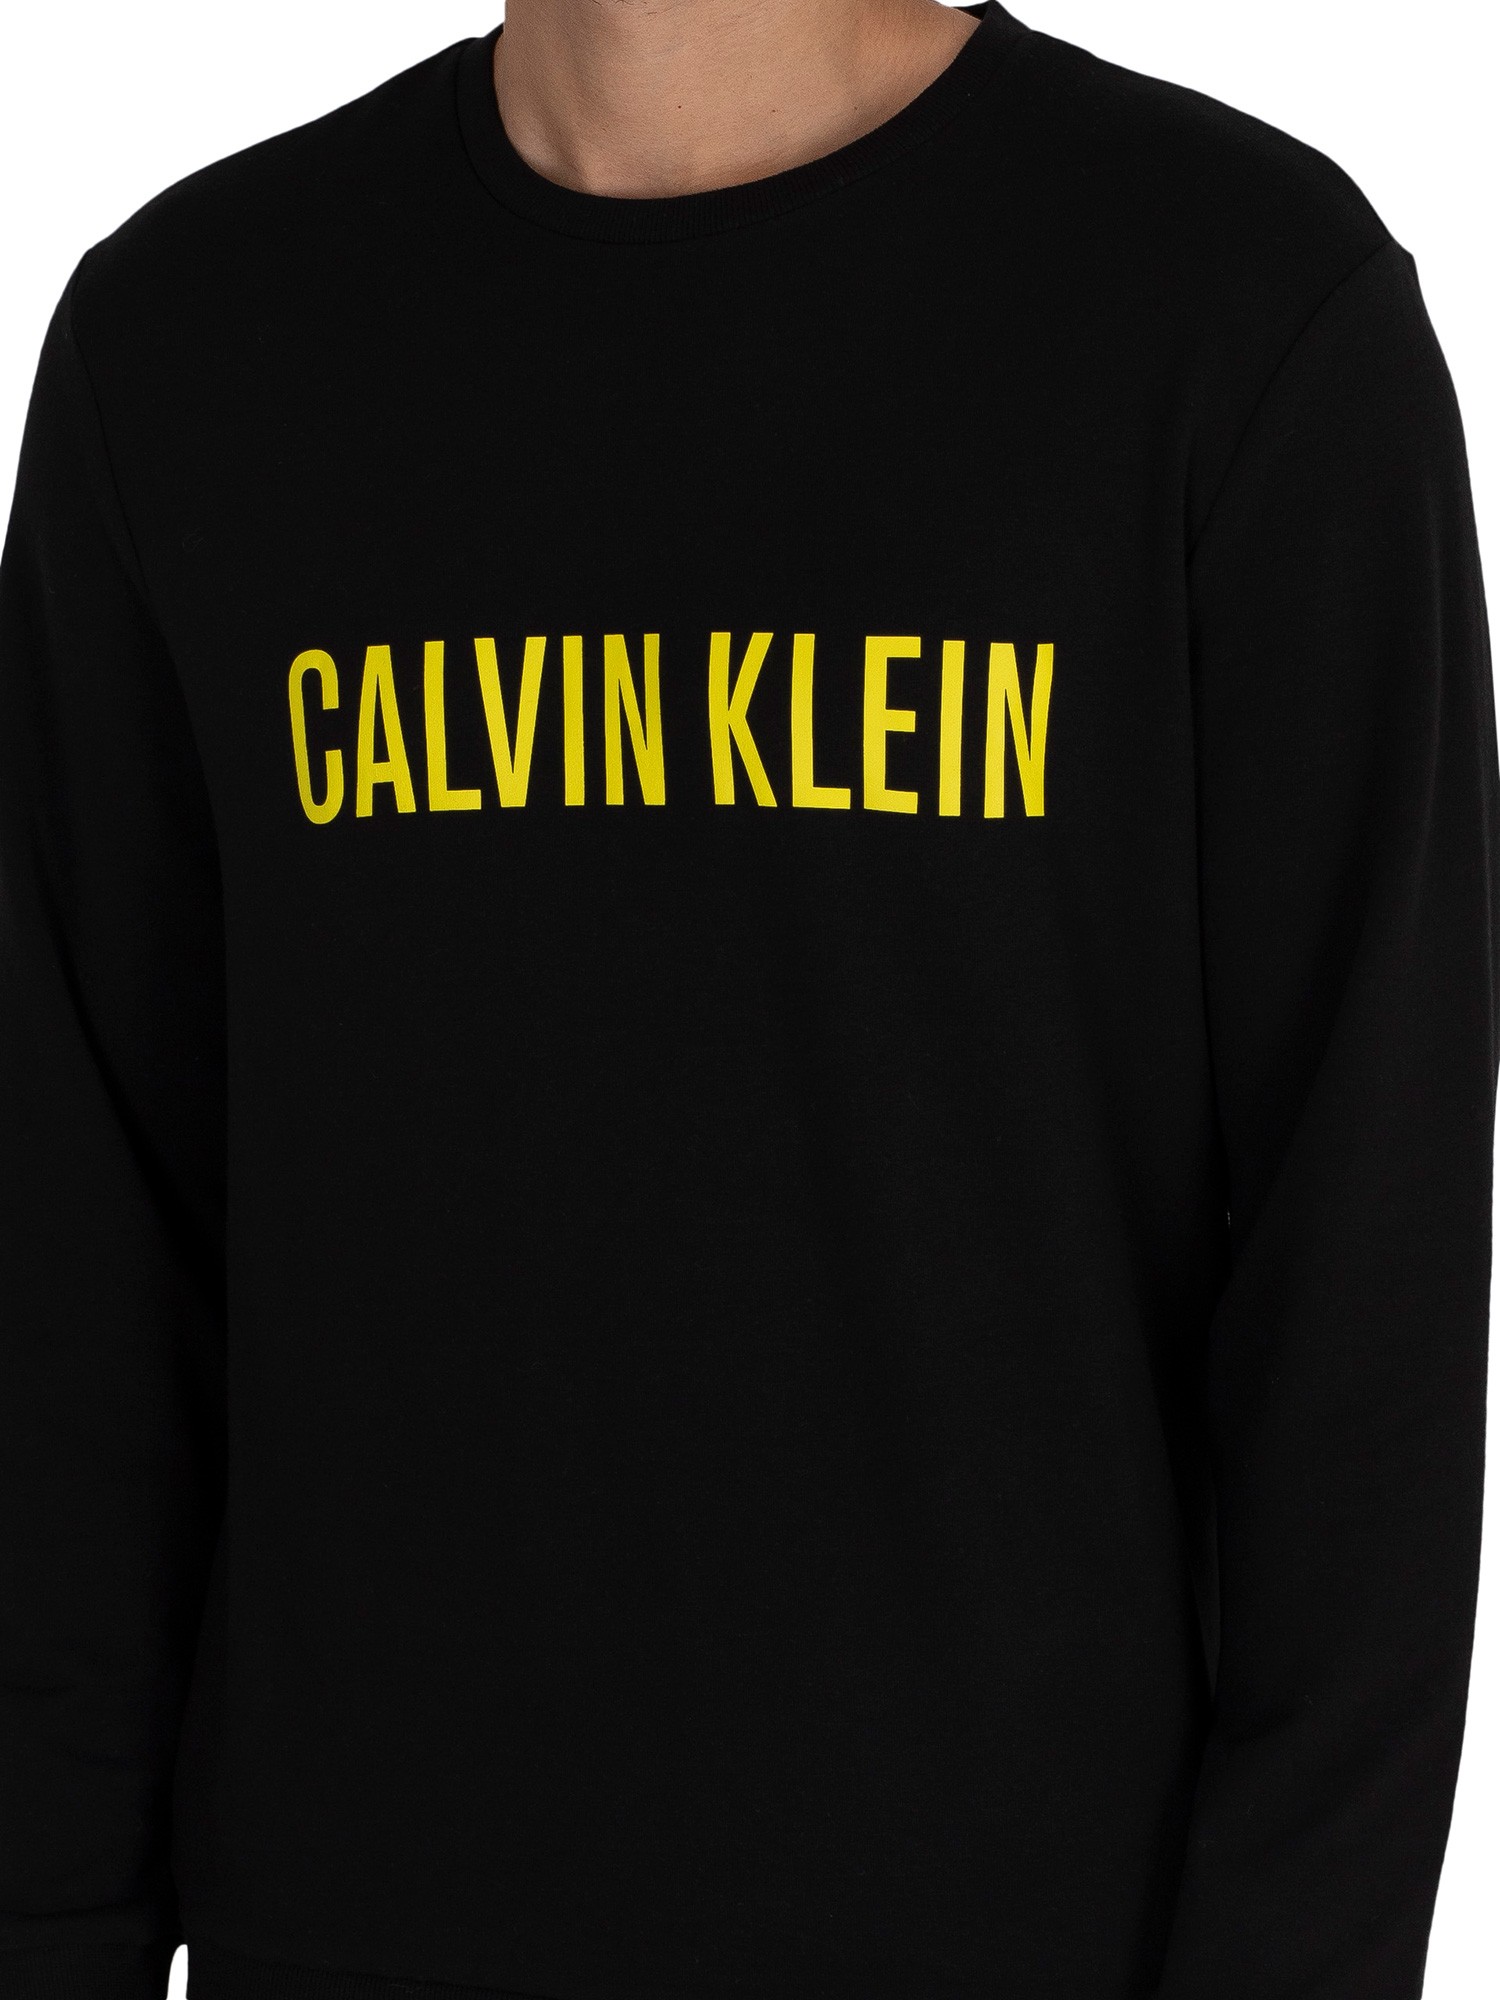 Fashion Sweats Sweatshirts Calvin Klein Jeans Sweat Shirt black printed lettering casual look 